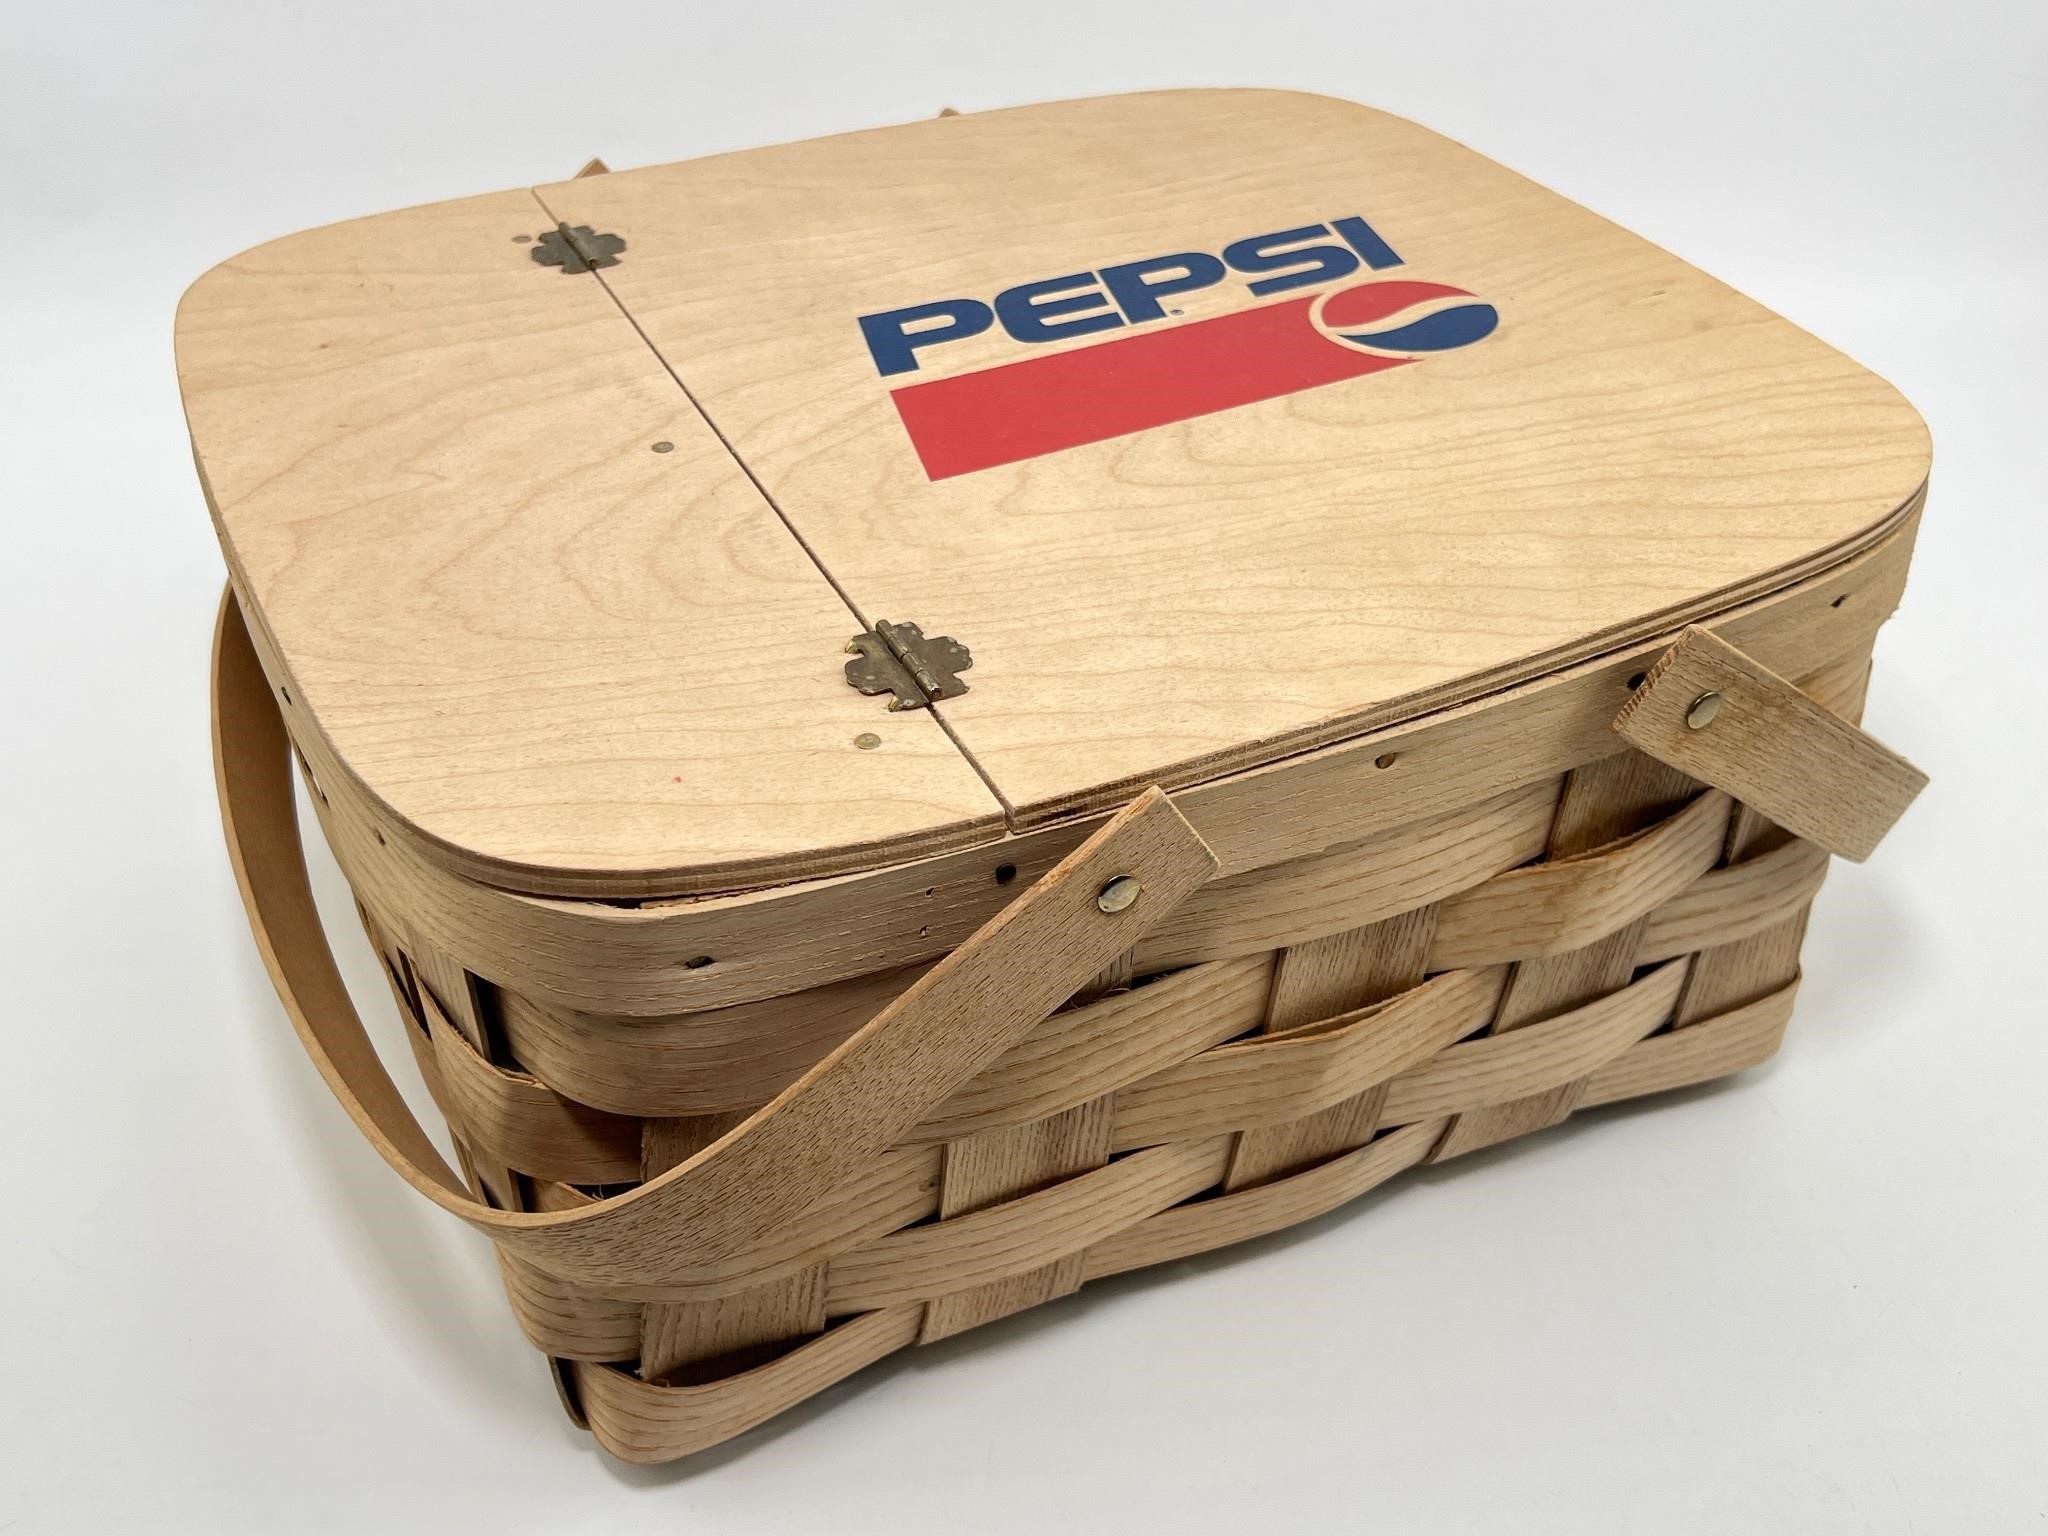 Pepsi Picnic Basket